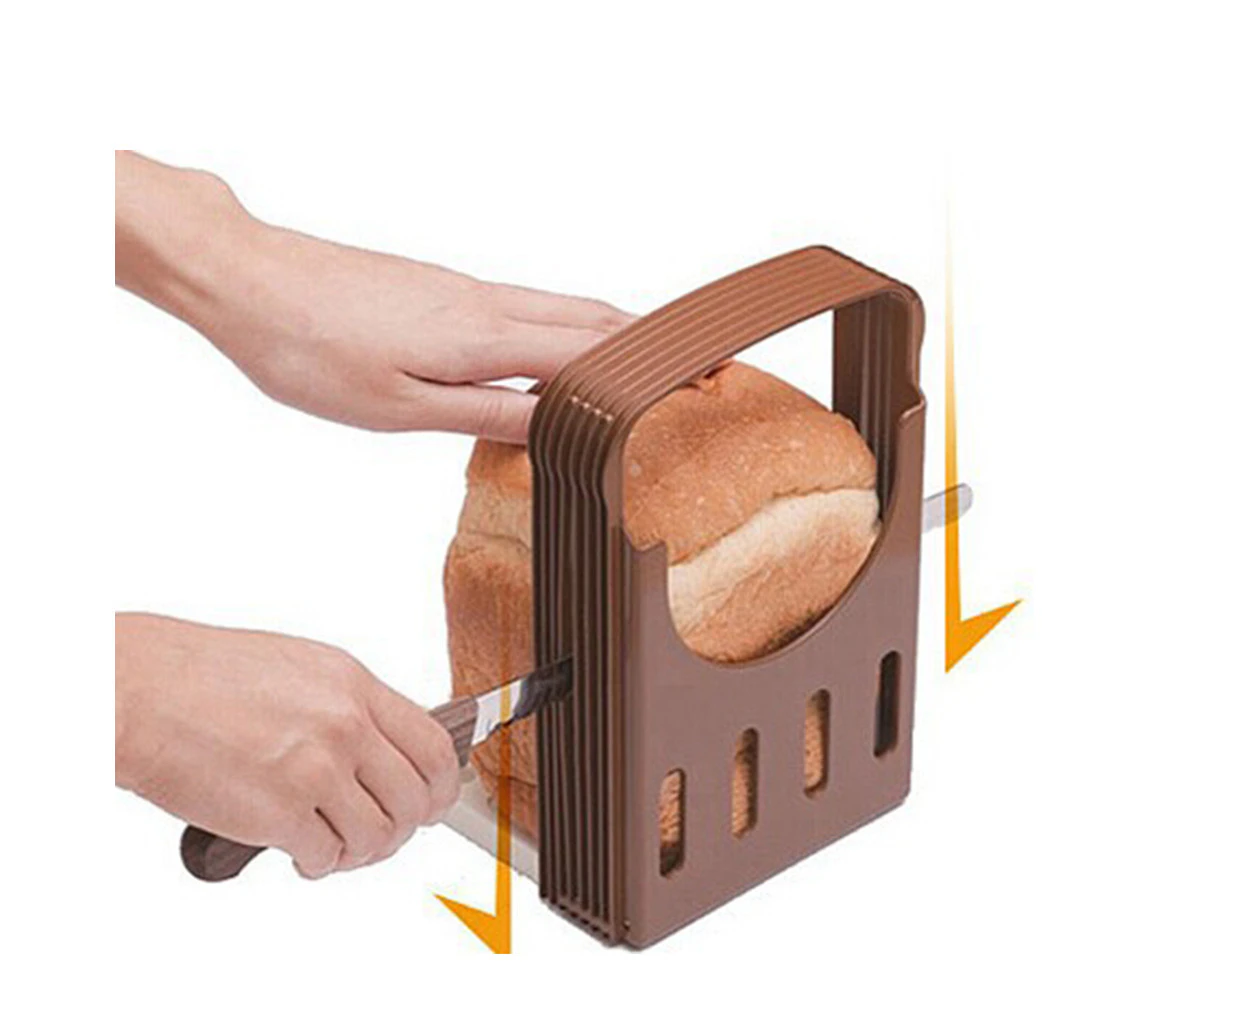 Fastwolf Bread Slicer,Adjustable Toast Slicer Toast Cutting Guide